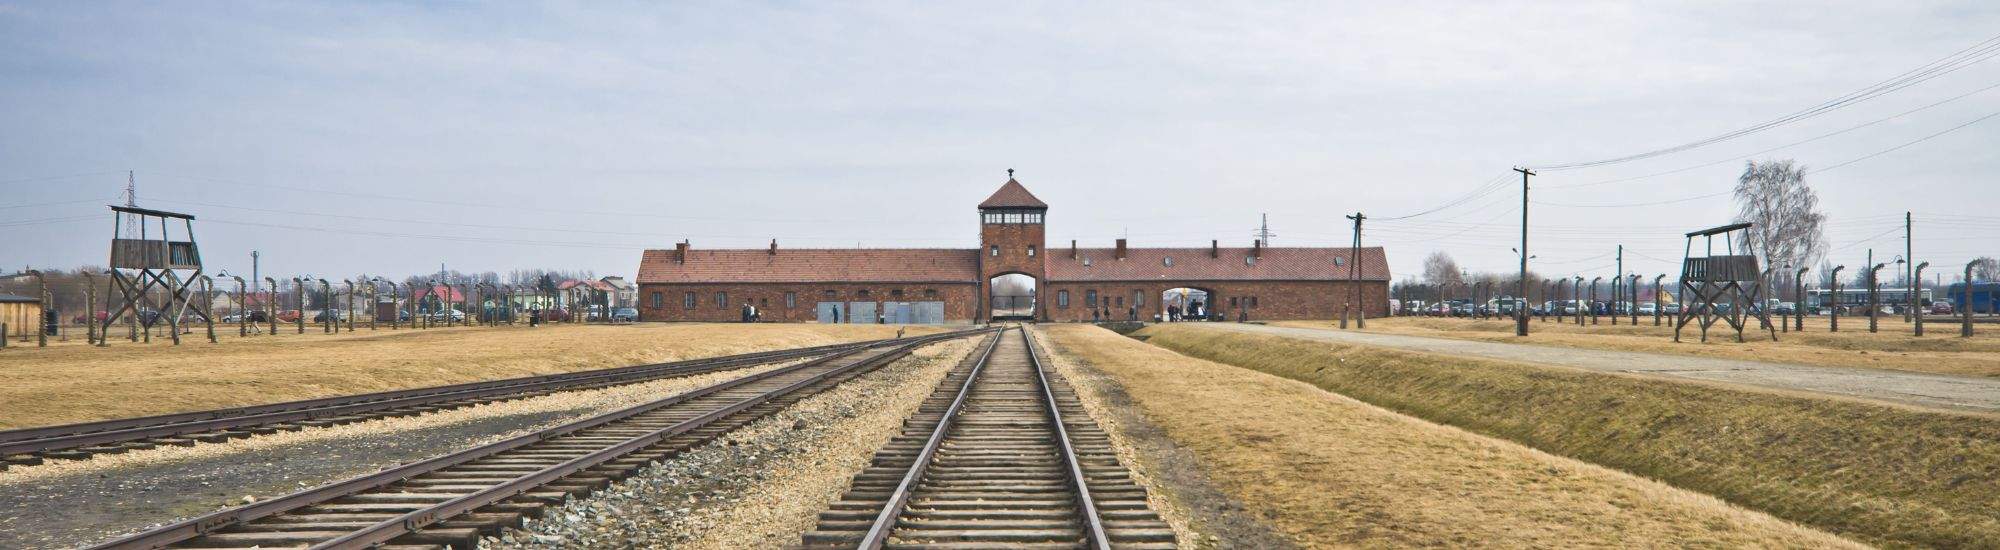 VS steunt virtuele tour van Auschwitz-Birkenau